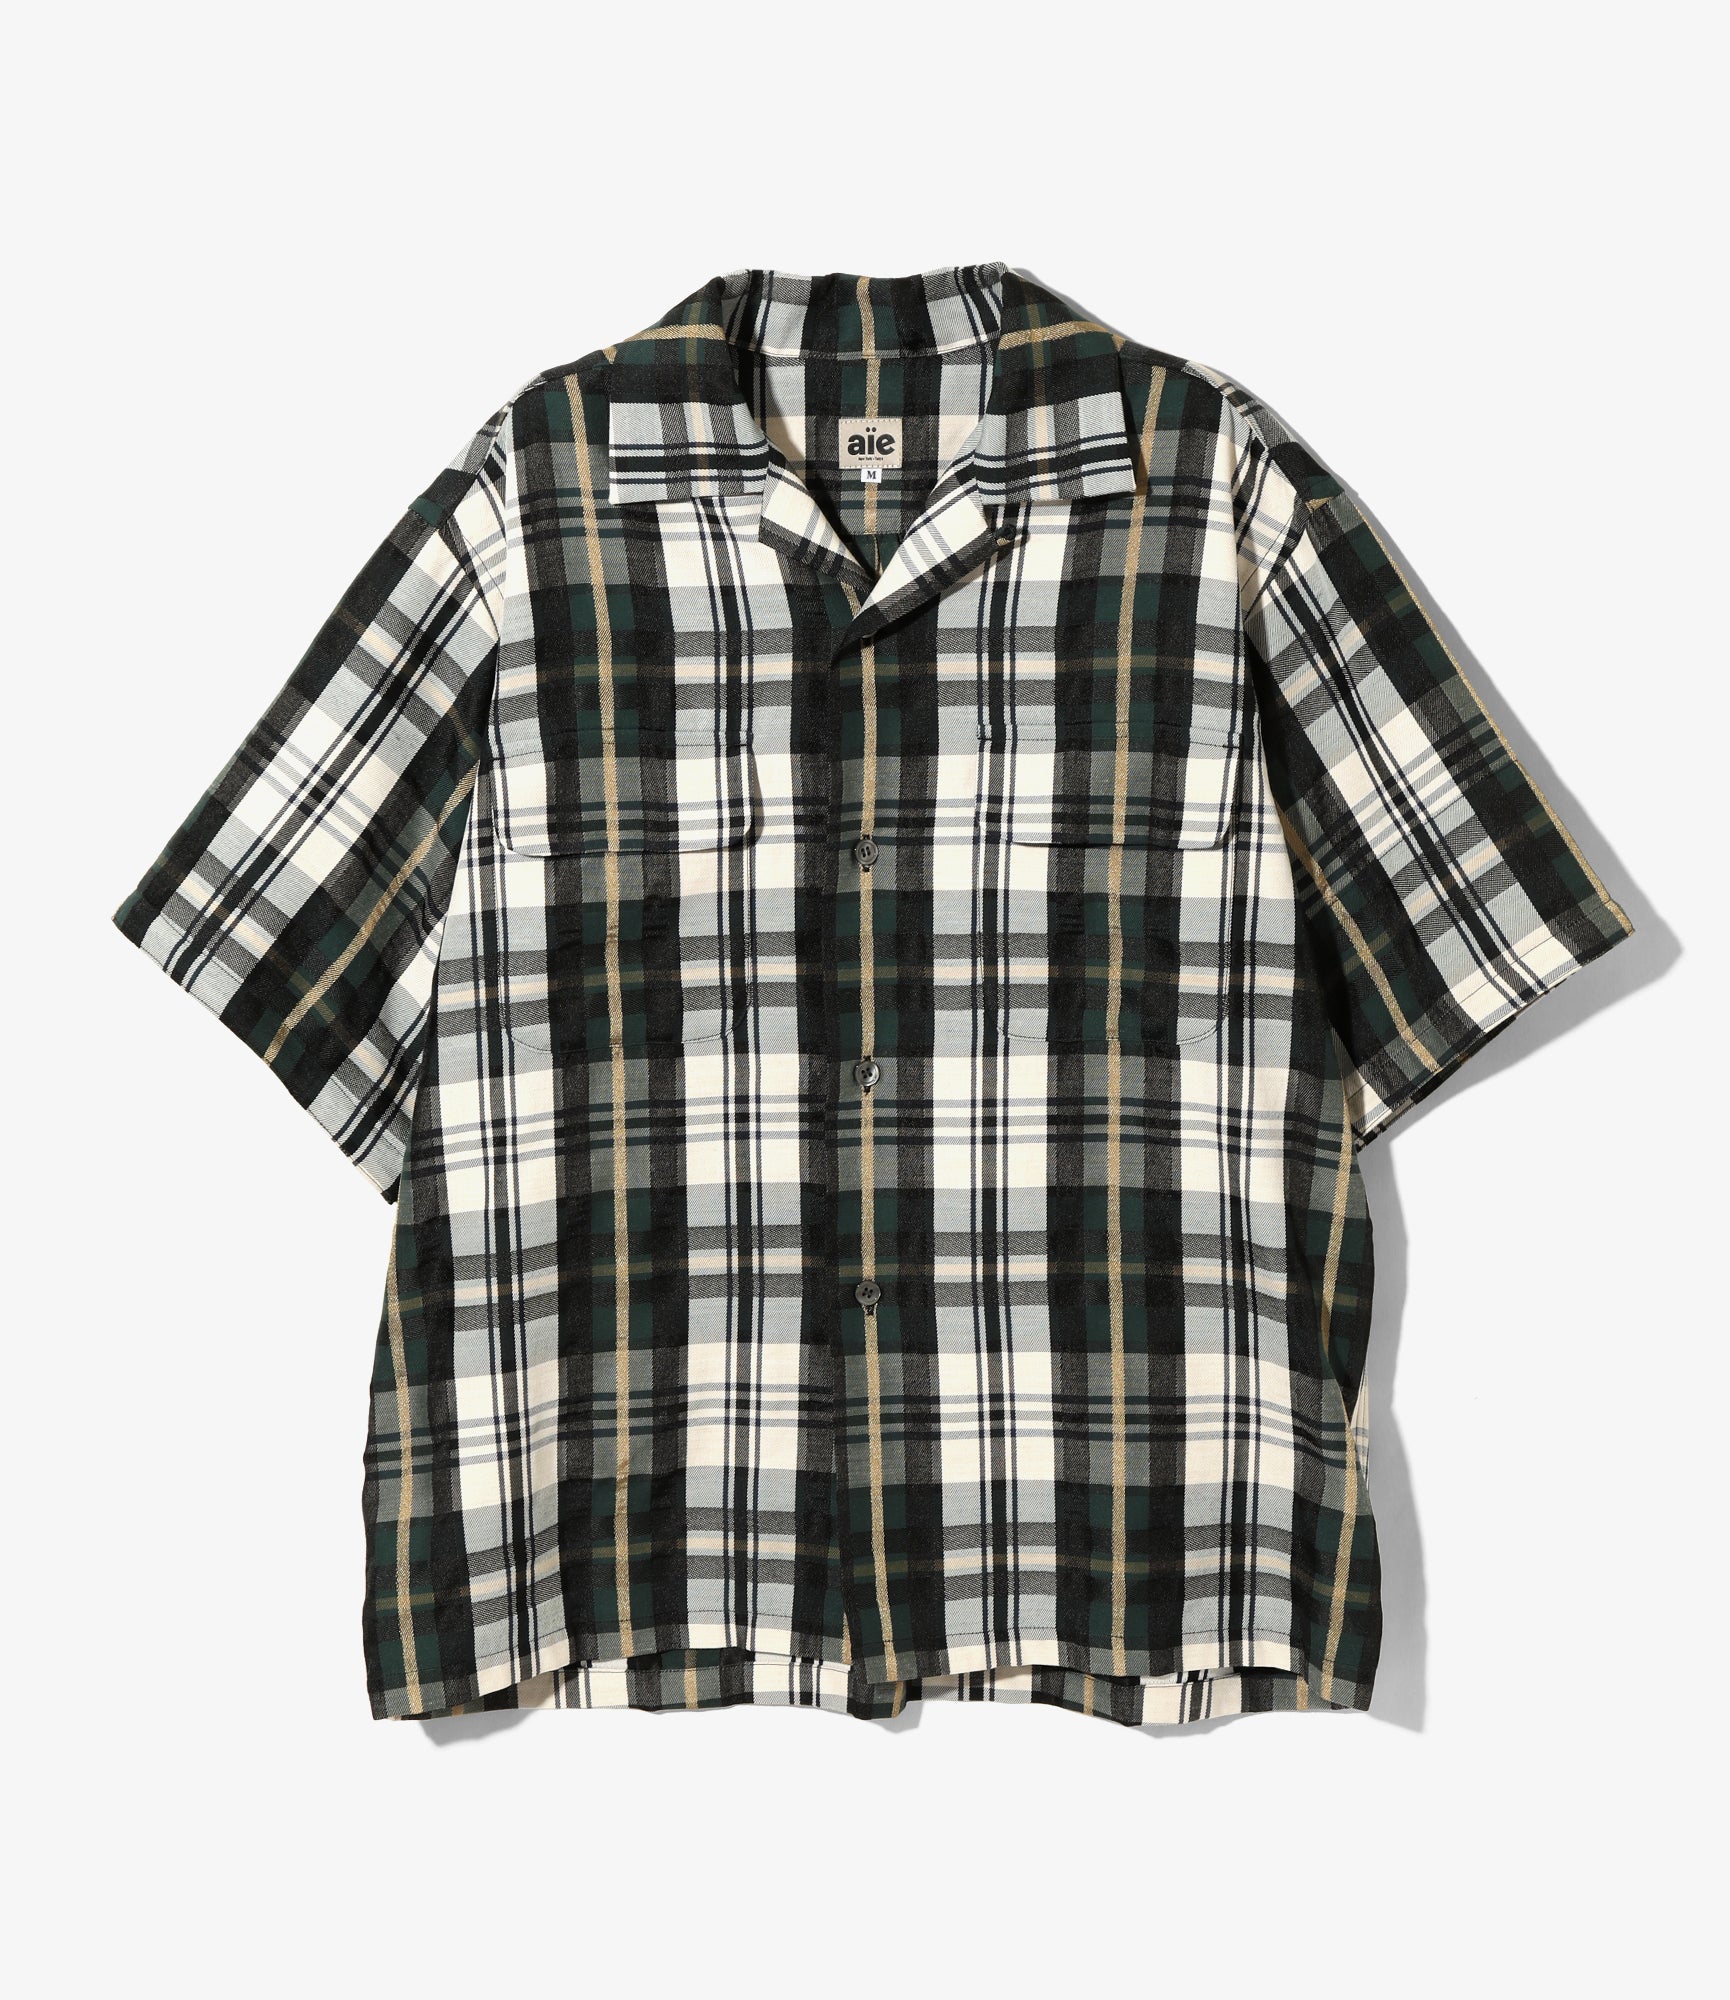 AiE ZPC Shirt - C/PE/W Tartan Plaid - Green